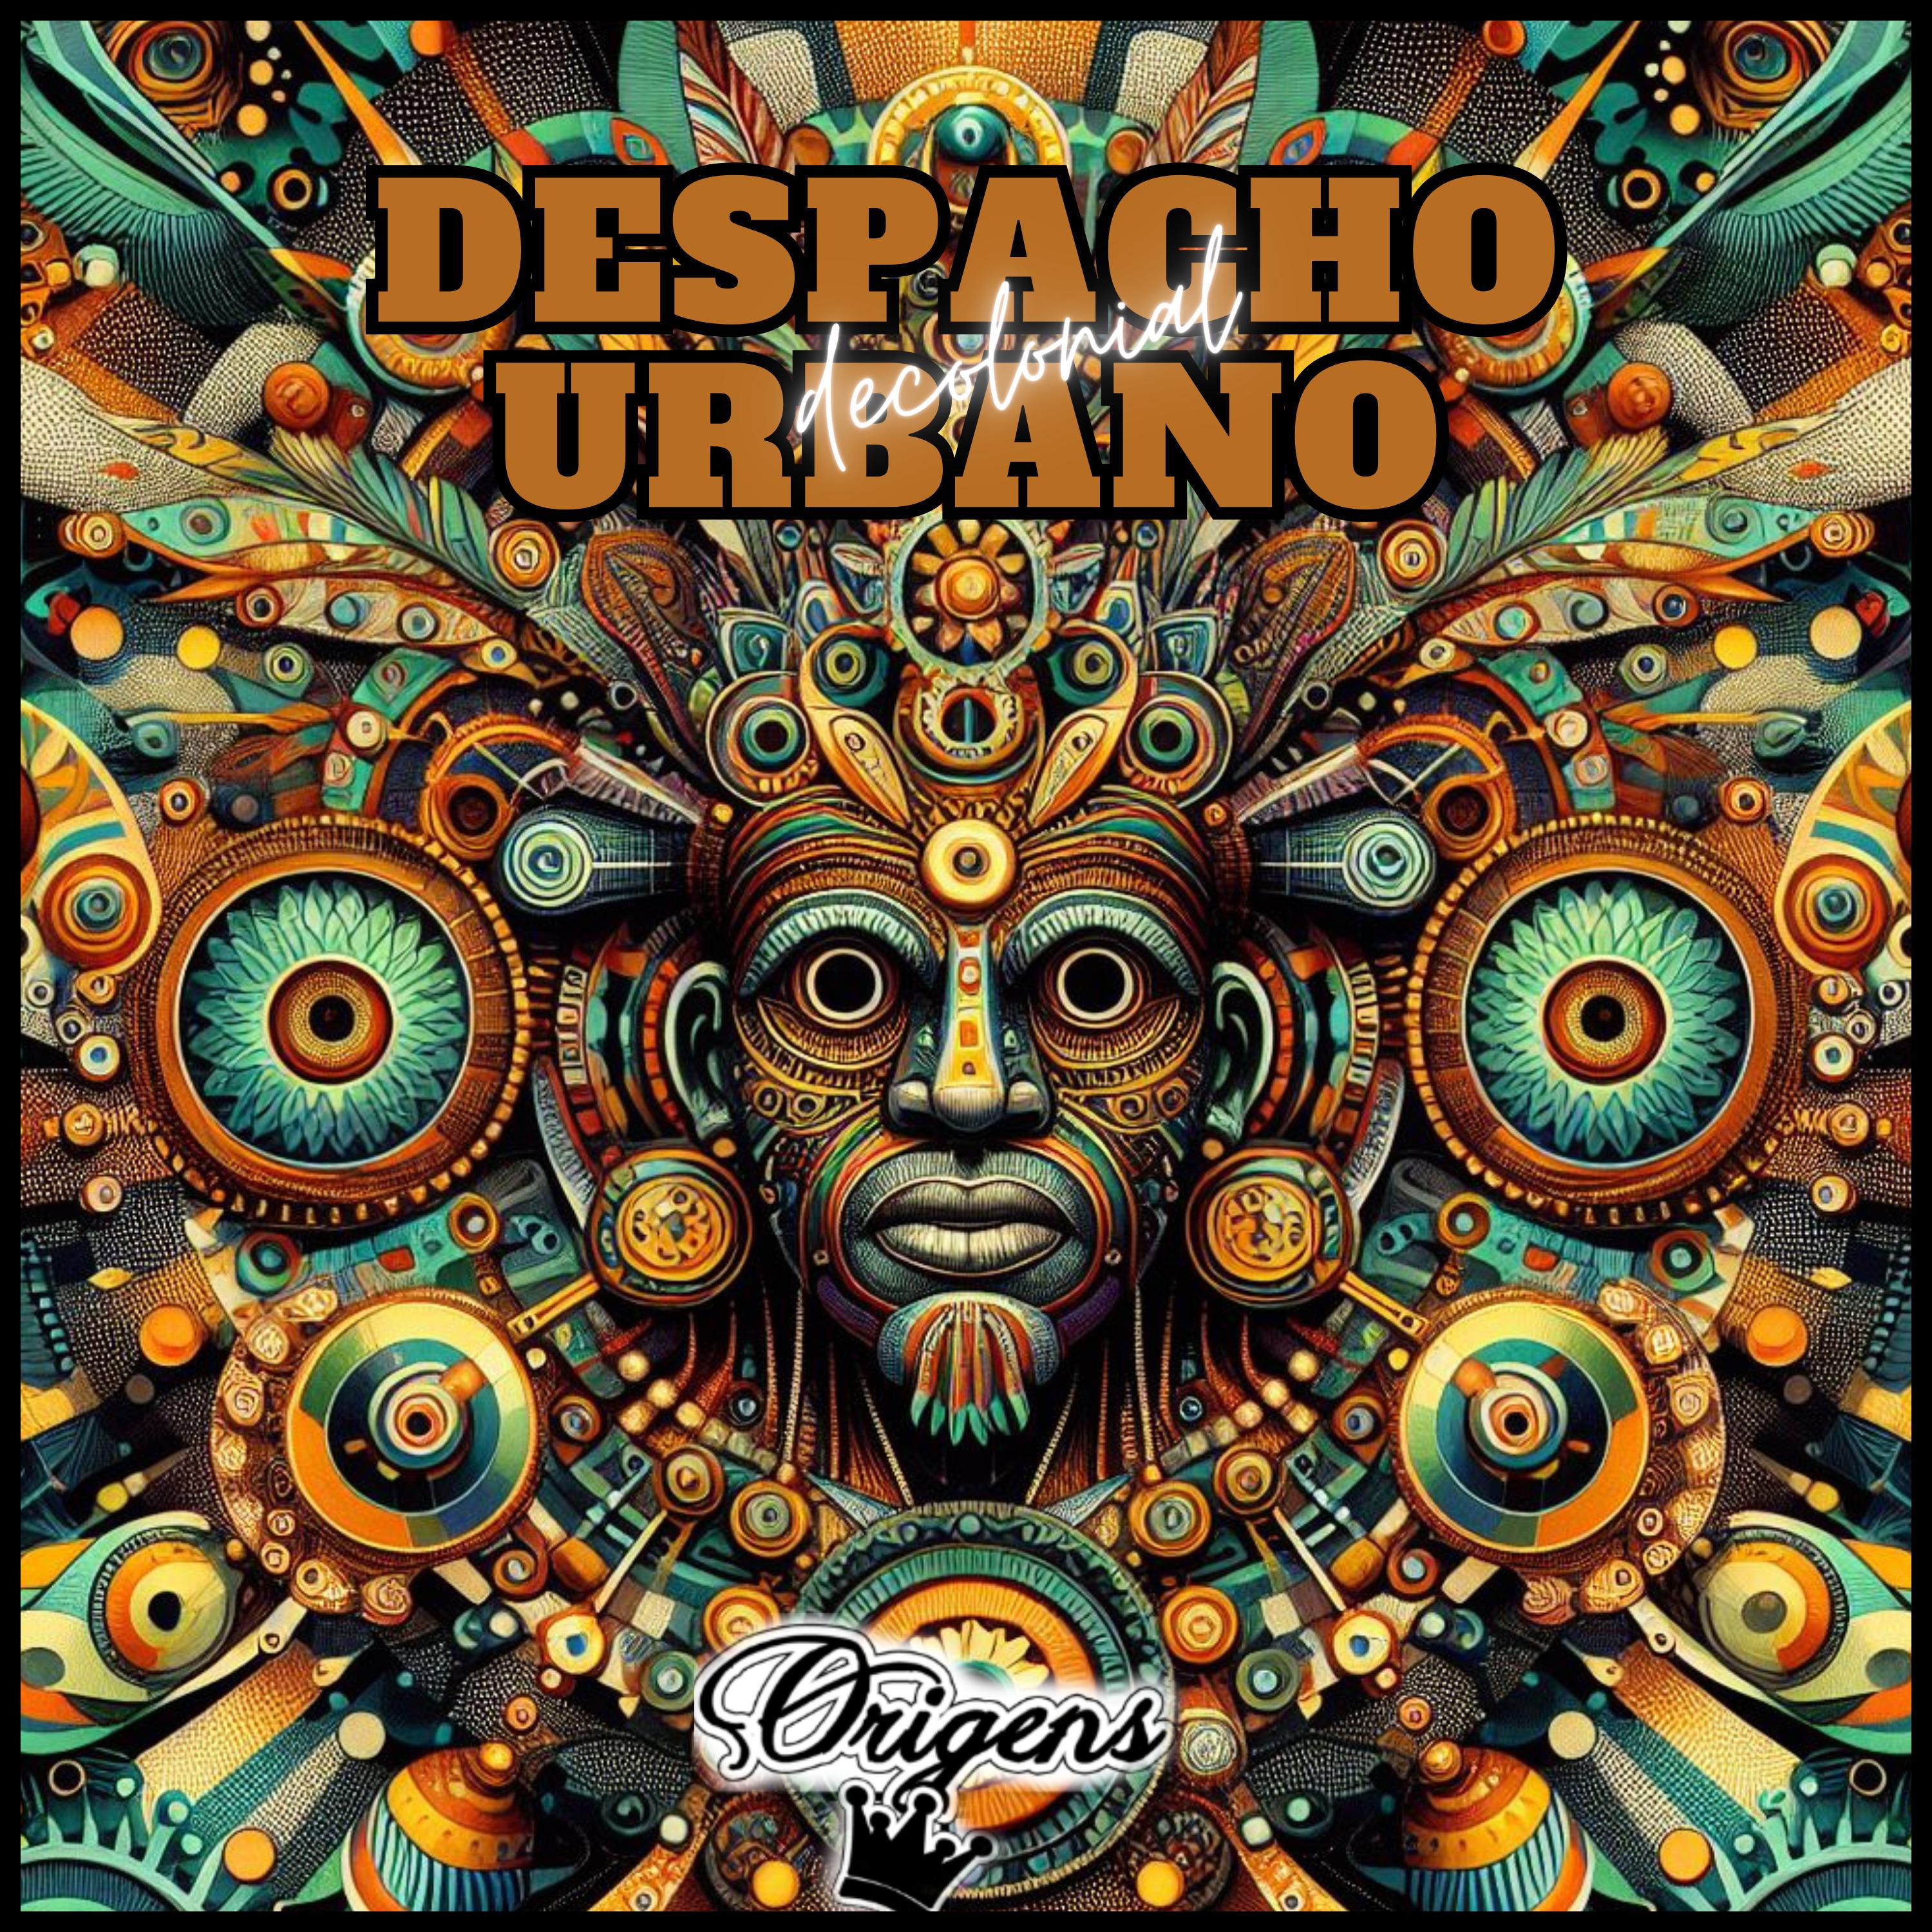 Постер альбома Despacho Urbano (Decolonial)